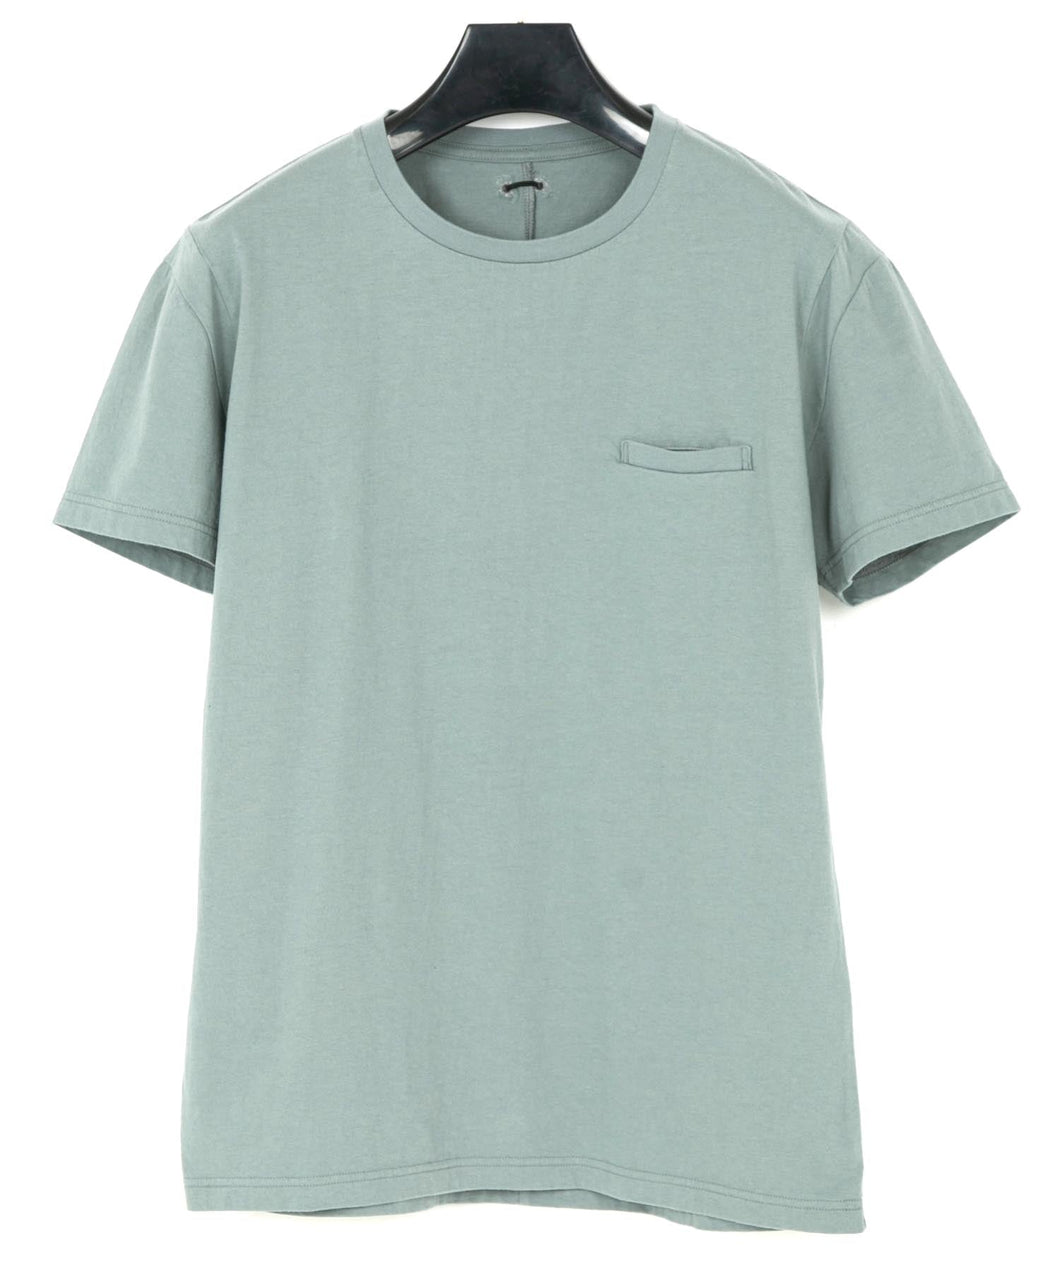 Natural Soft Cotton Crew Neck T-shirt - BLUE GRAY